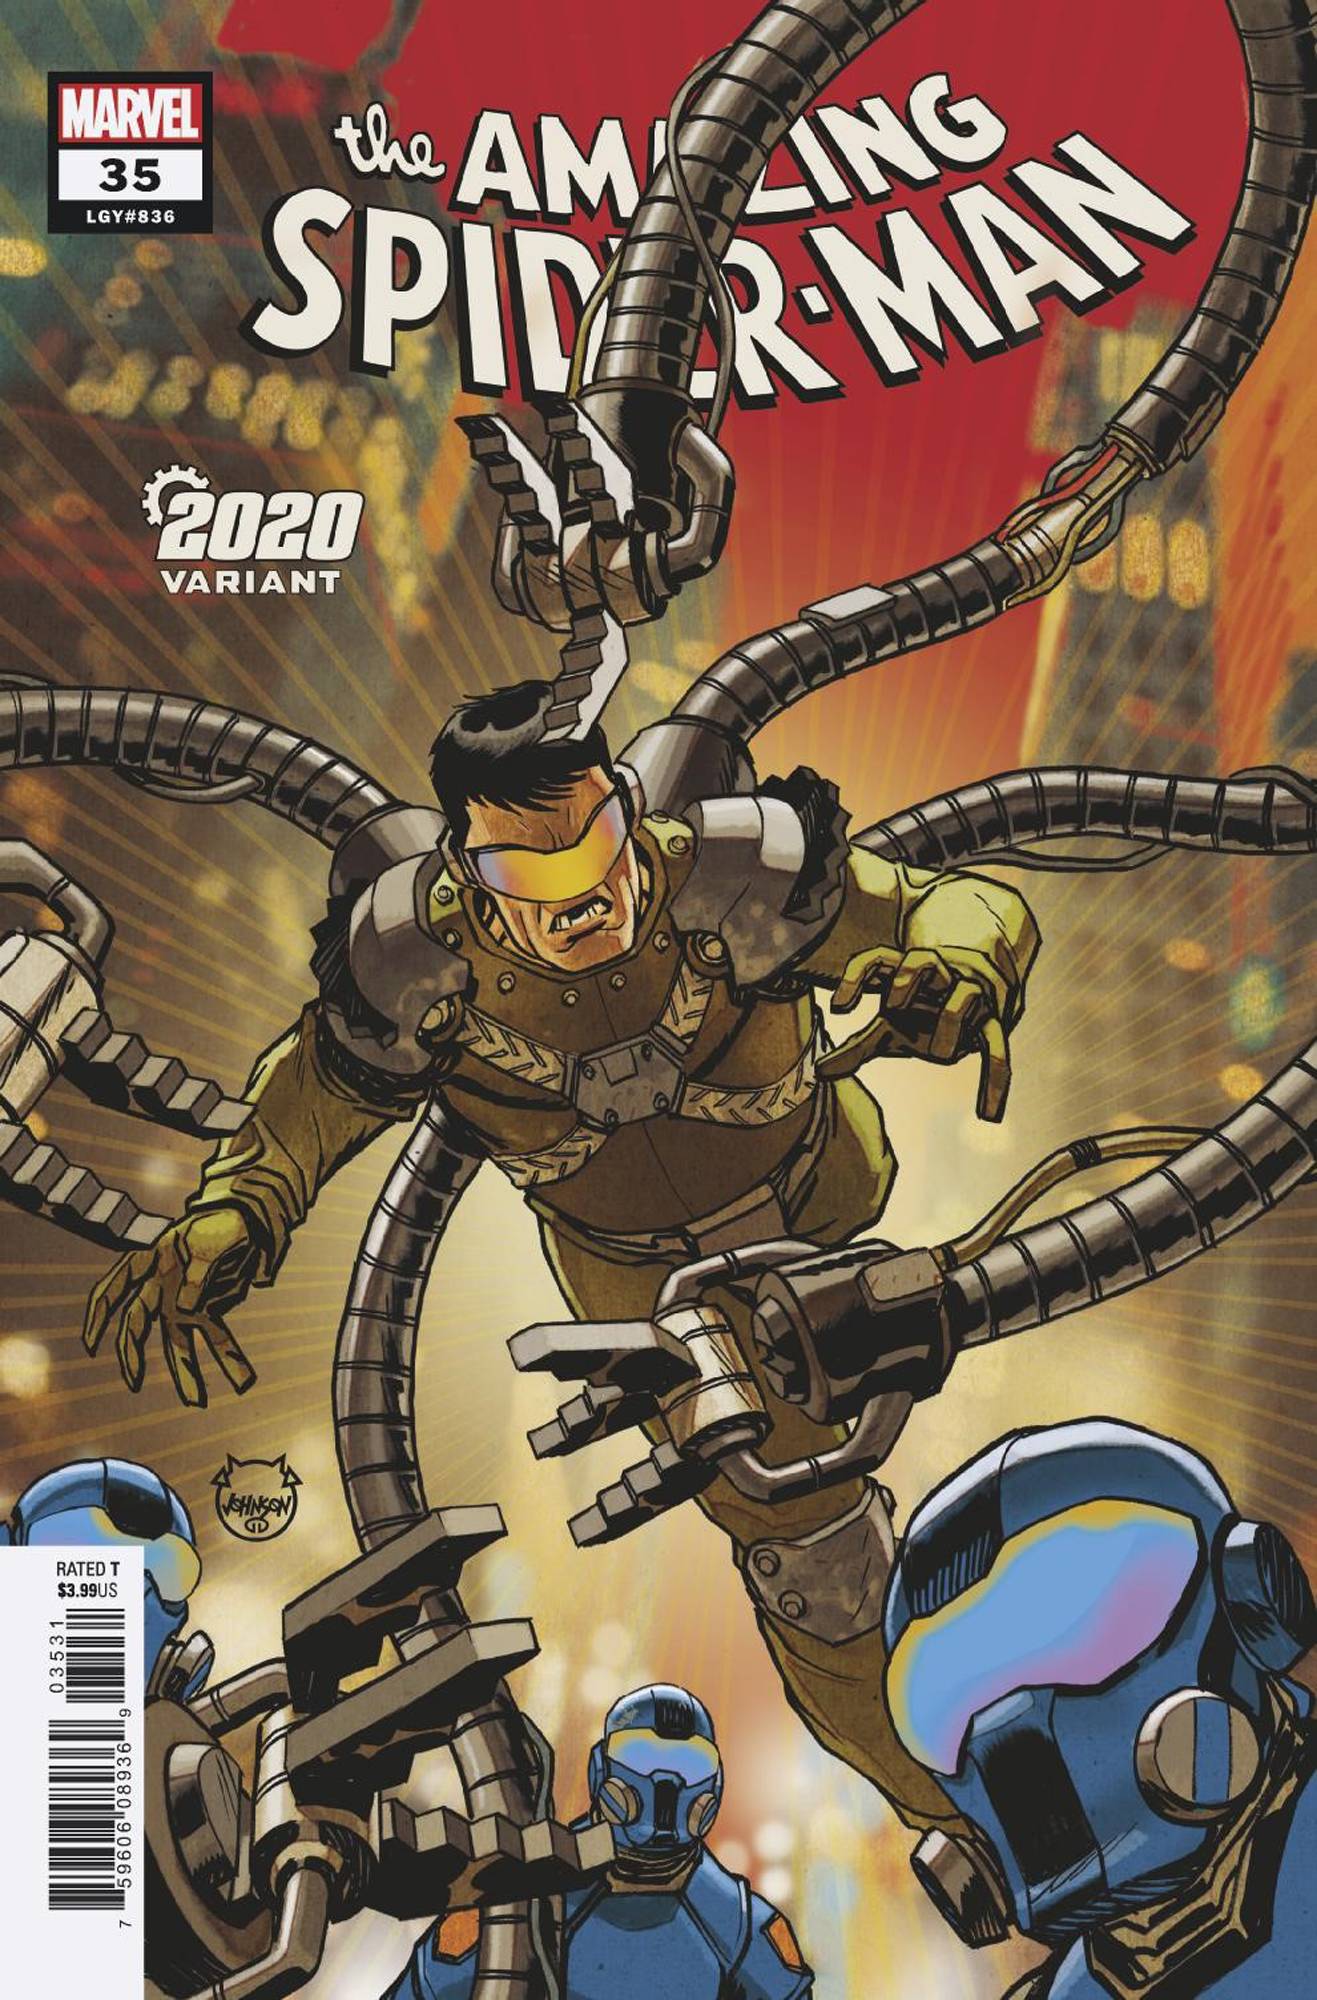 Amazing Spider-Man #35 Johnson 2020 Variant 2099 (2018)